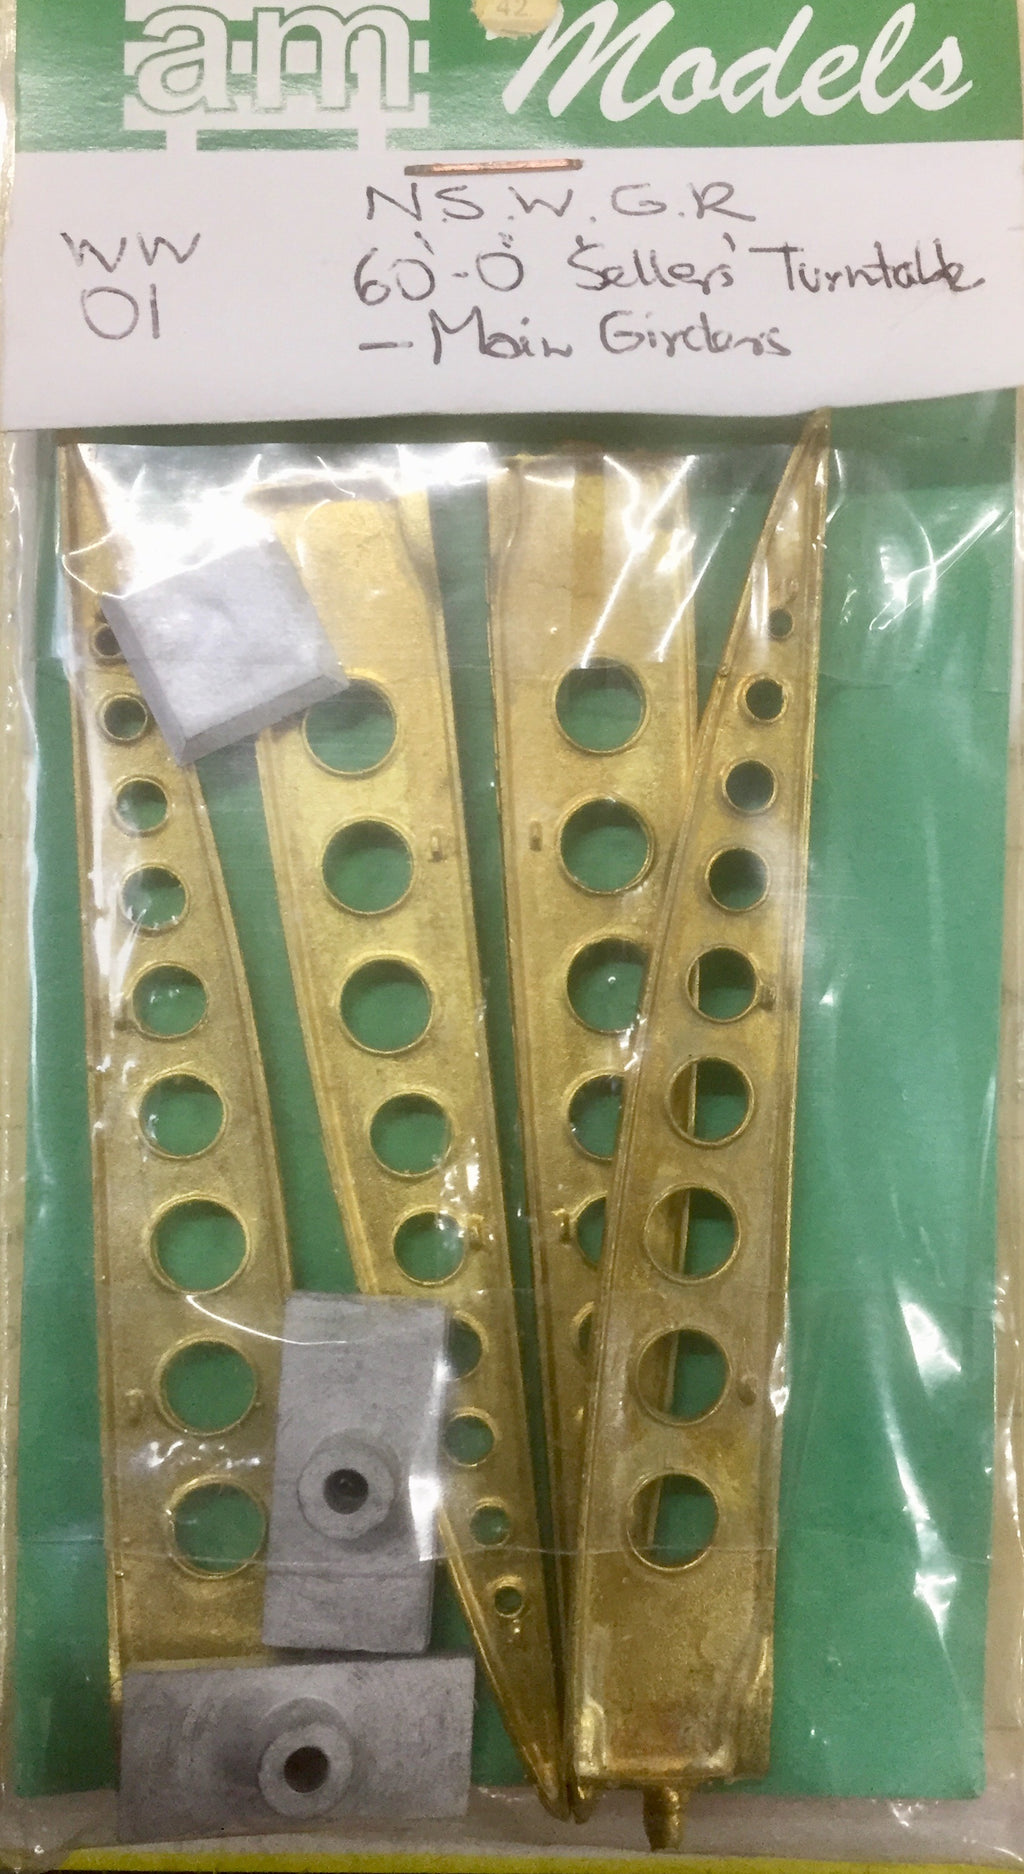 AM Models : WW01 NSWGR 60ft Turntable Girder (Sellers type) brass casting (4)